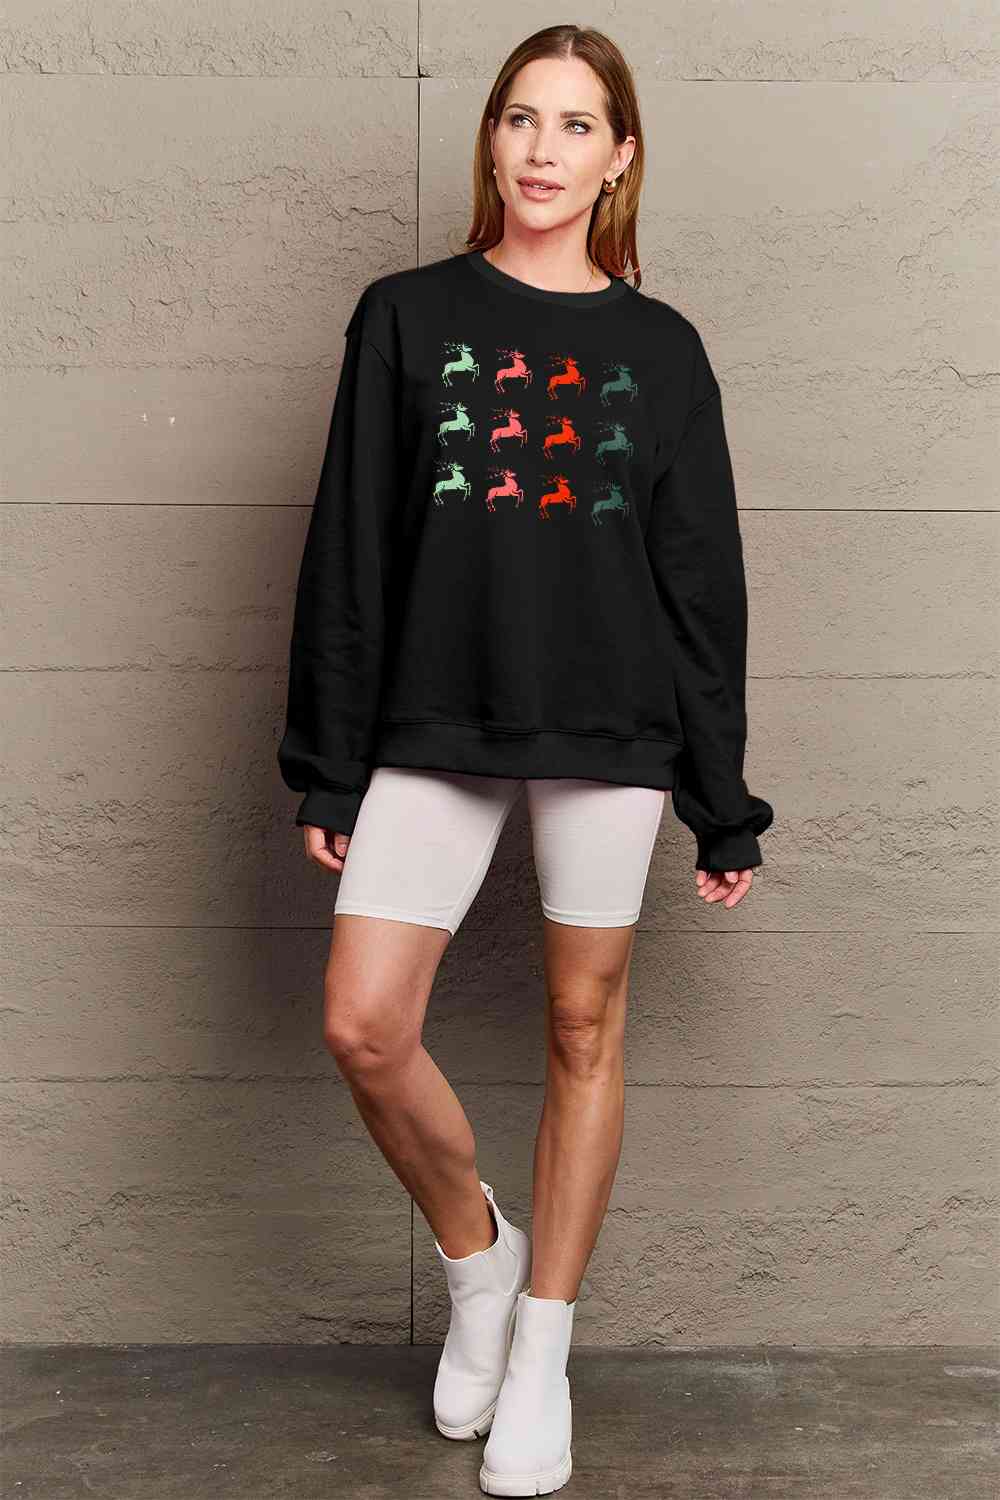 Simply Love Graphic Long Sleeve Sweatshirt